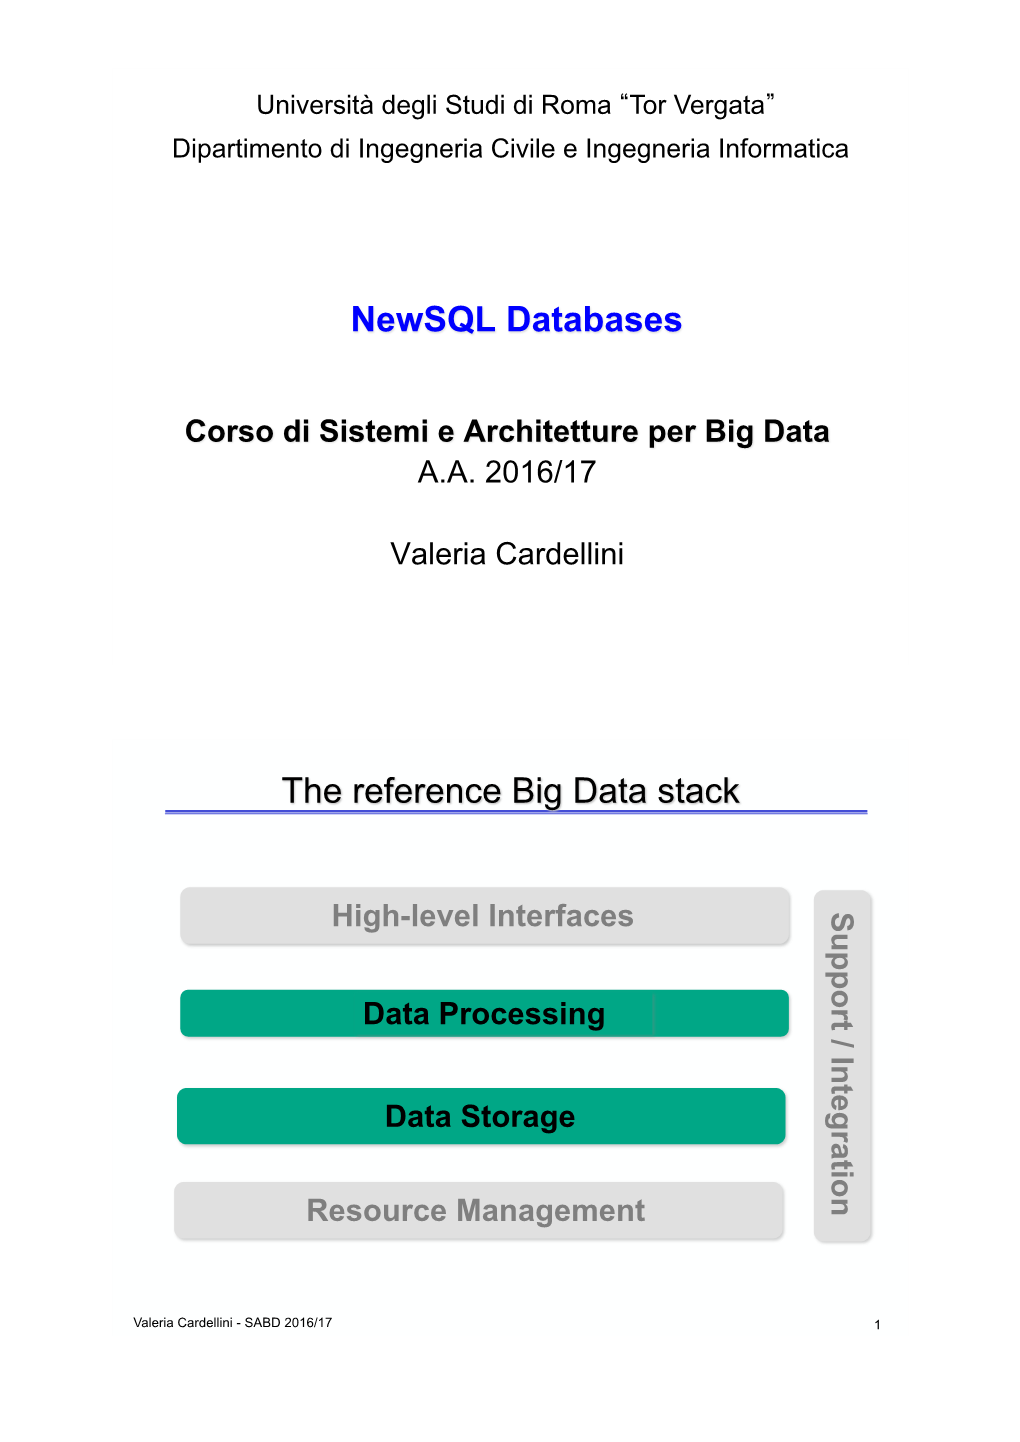 Newsql Databases